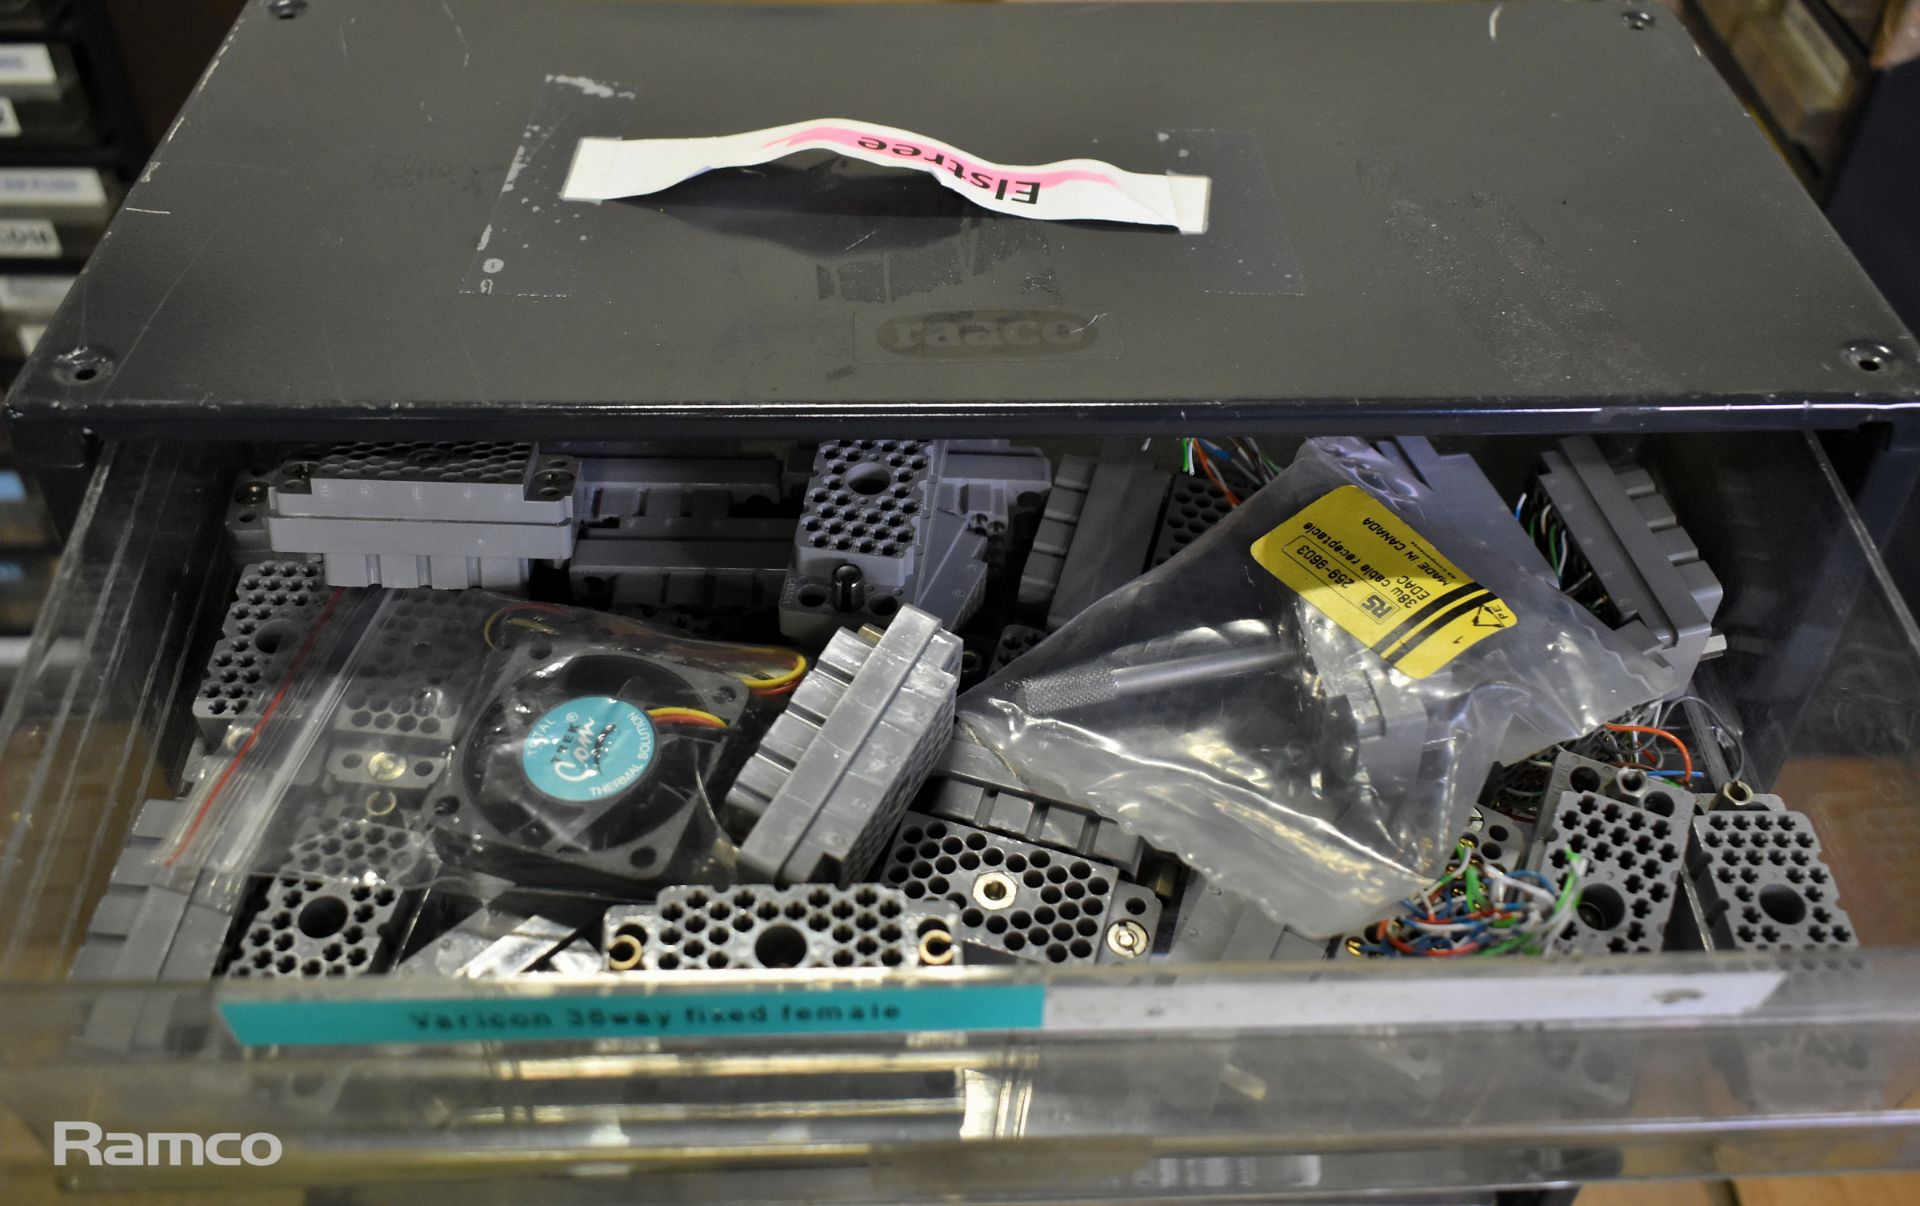 2x Raaco 6 drawer storage chest organisers - W 305 x D 160 x H 420mm & 5x Raaco 36 drawer units - Image 23 of 27